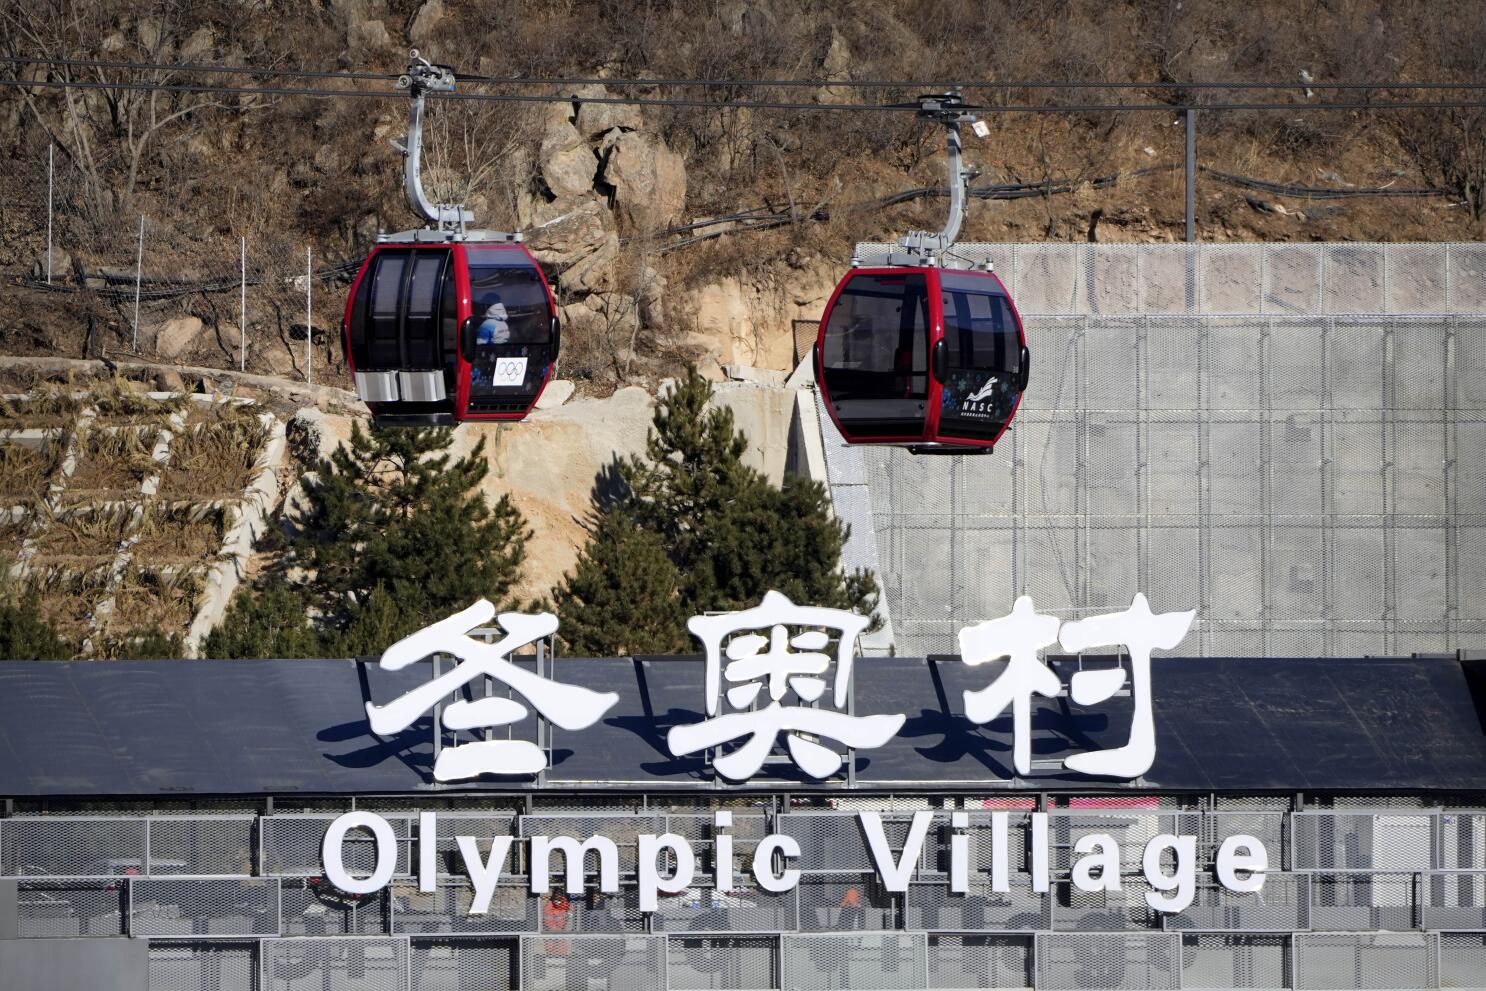 Beijing Games 2022: Google kicks off Winter Olympics with cute